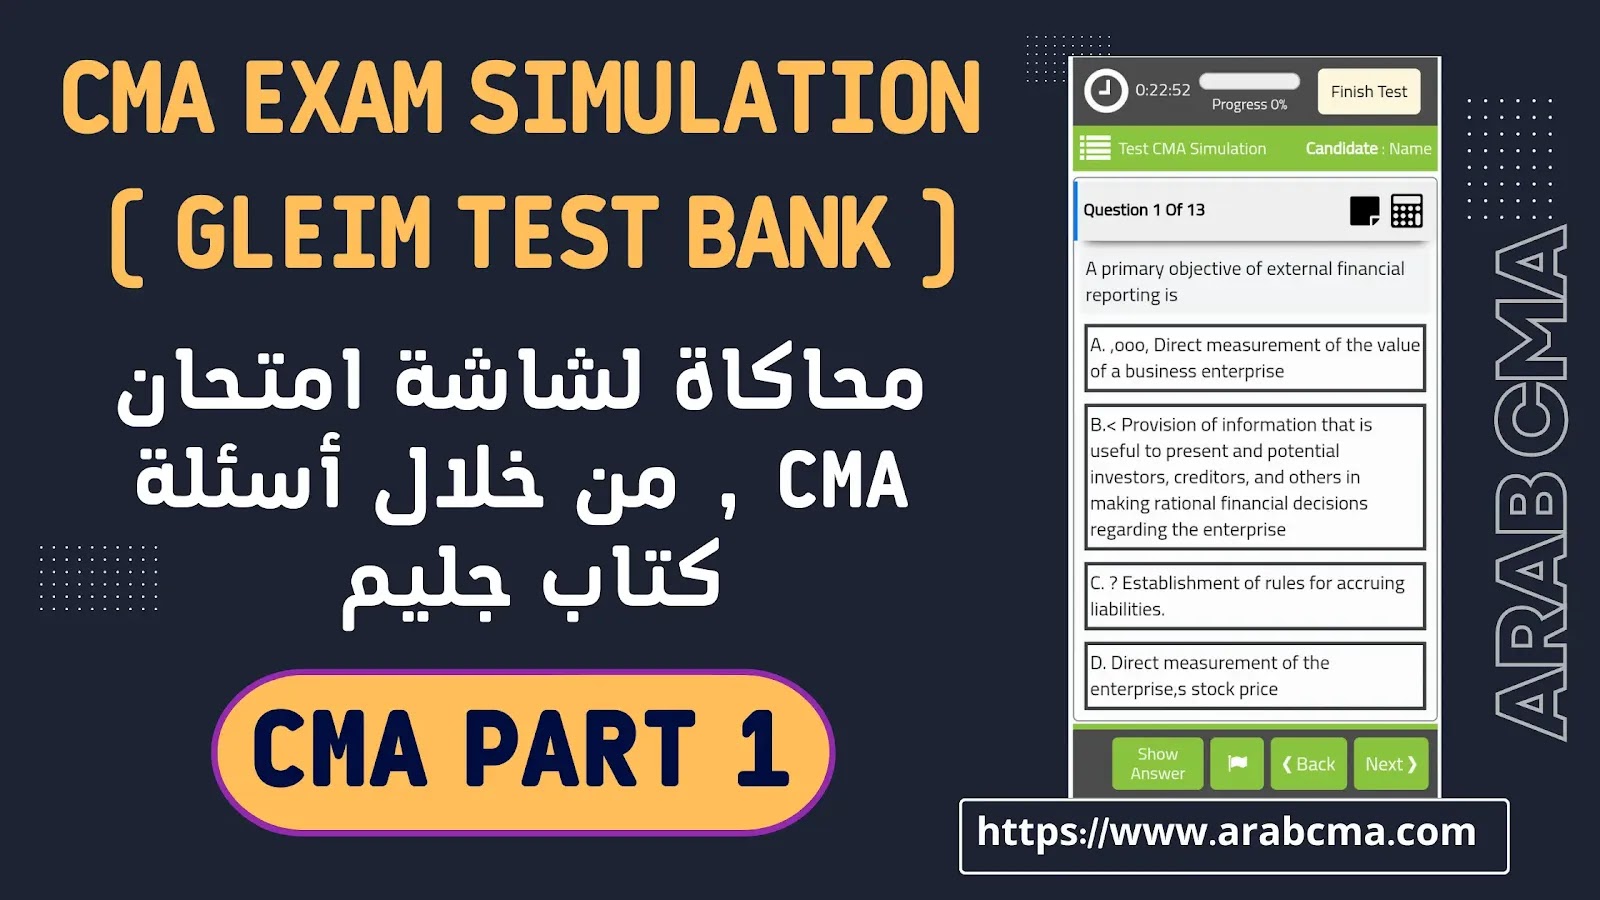 CMA EXAM SIMULATION , محاكاة لشاشة امتحان CMA من خلال اسئلة Gleim لمنهج CMA Part 1